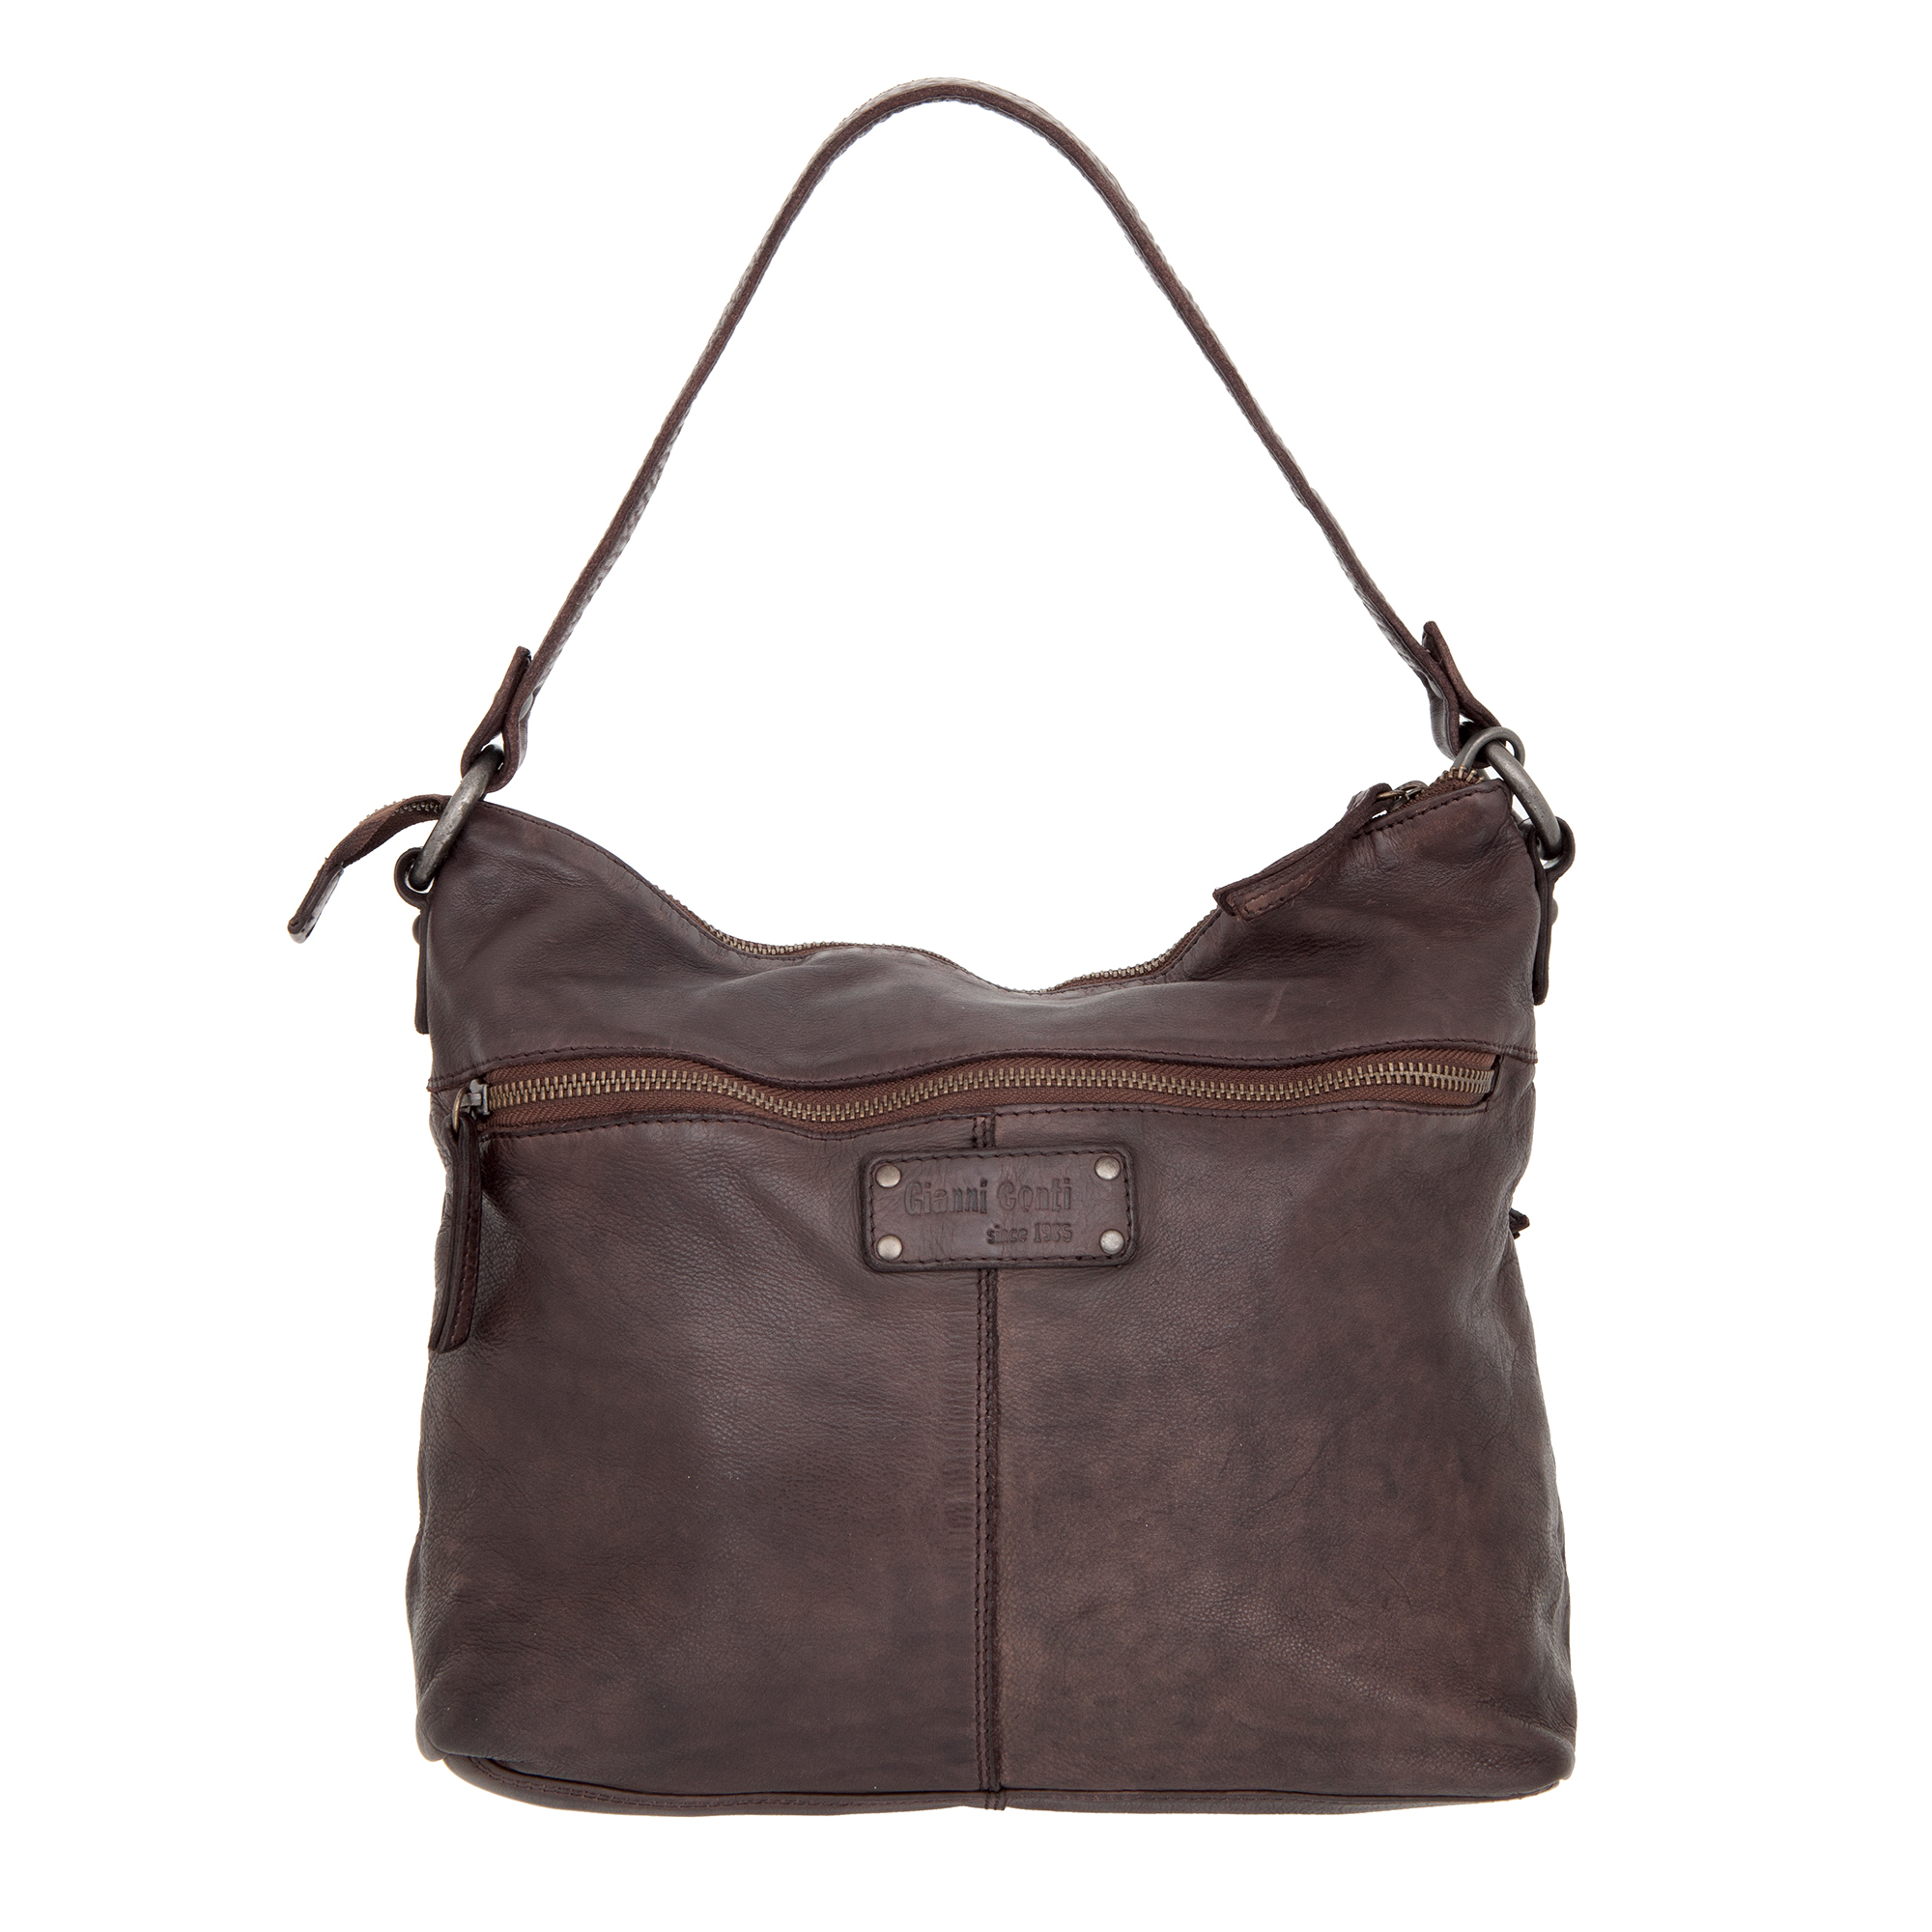 Женская сумка
Gianni Conti
4203398 brown Сумки